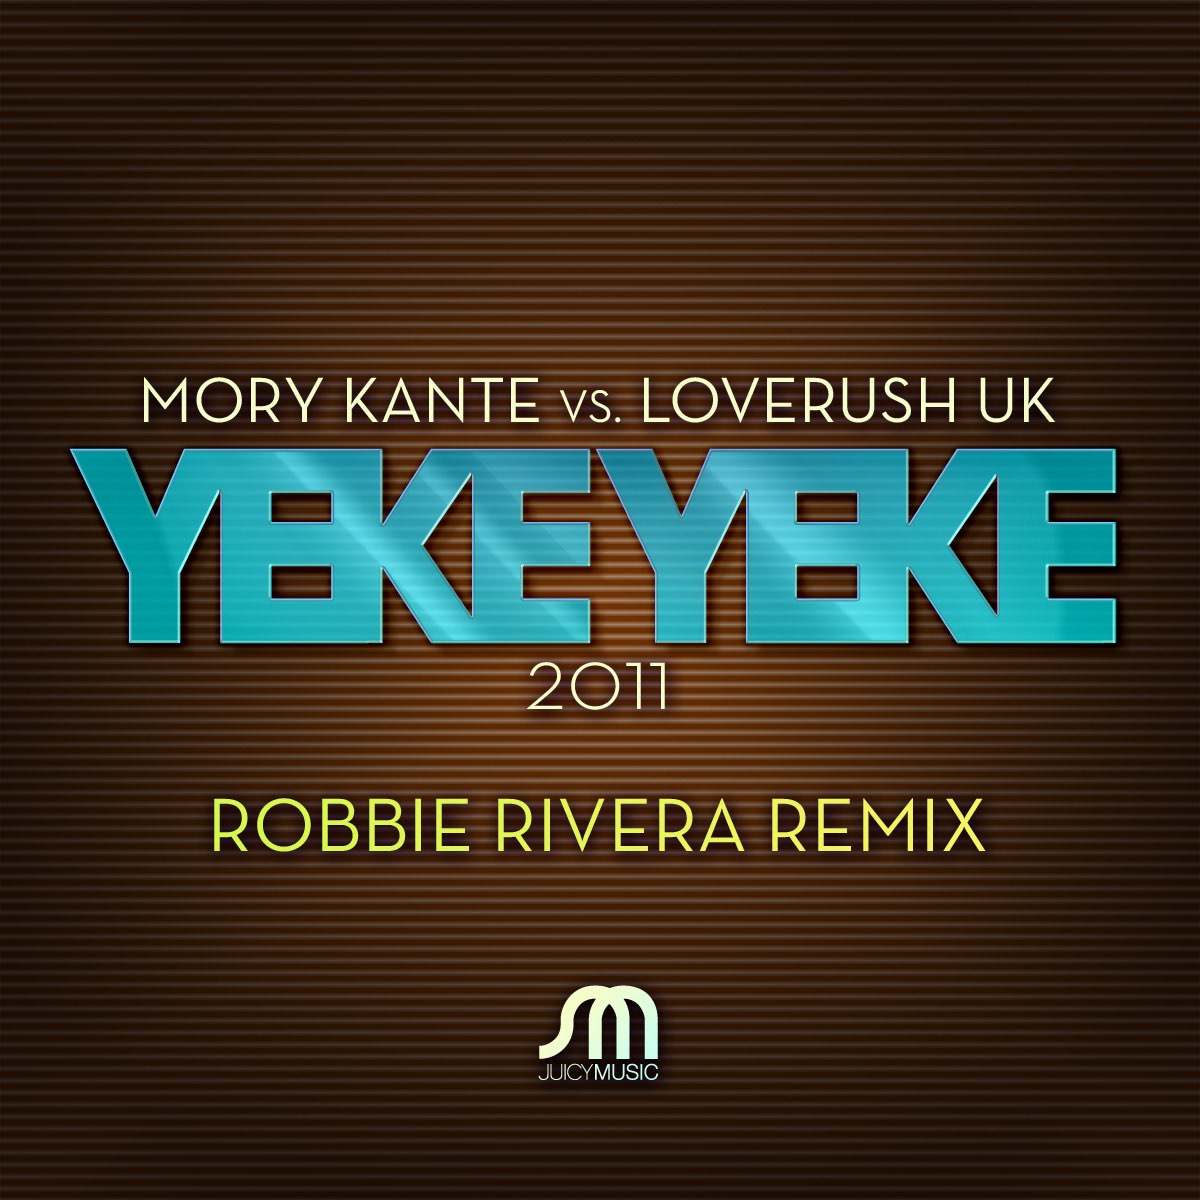 Yeke Yeke 2011 - Single by Mory Kanté on Apple Music